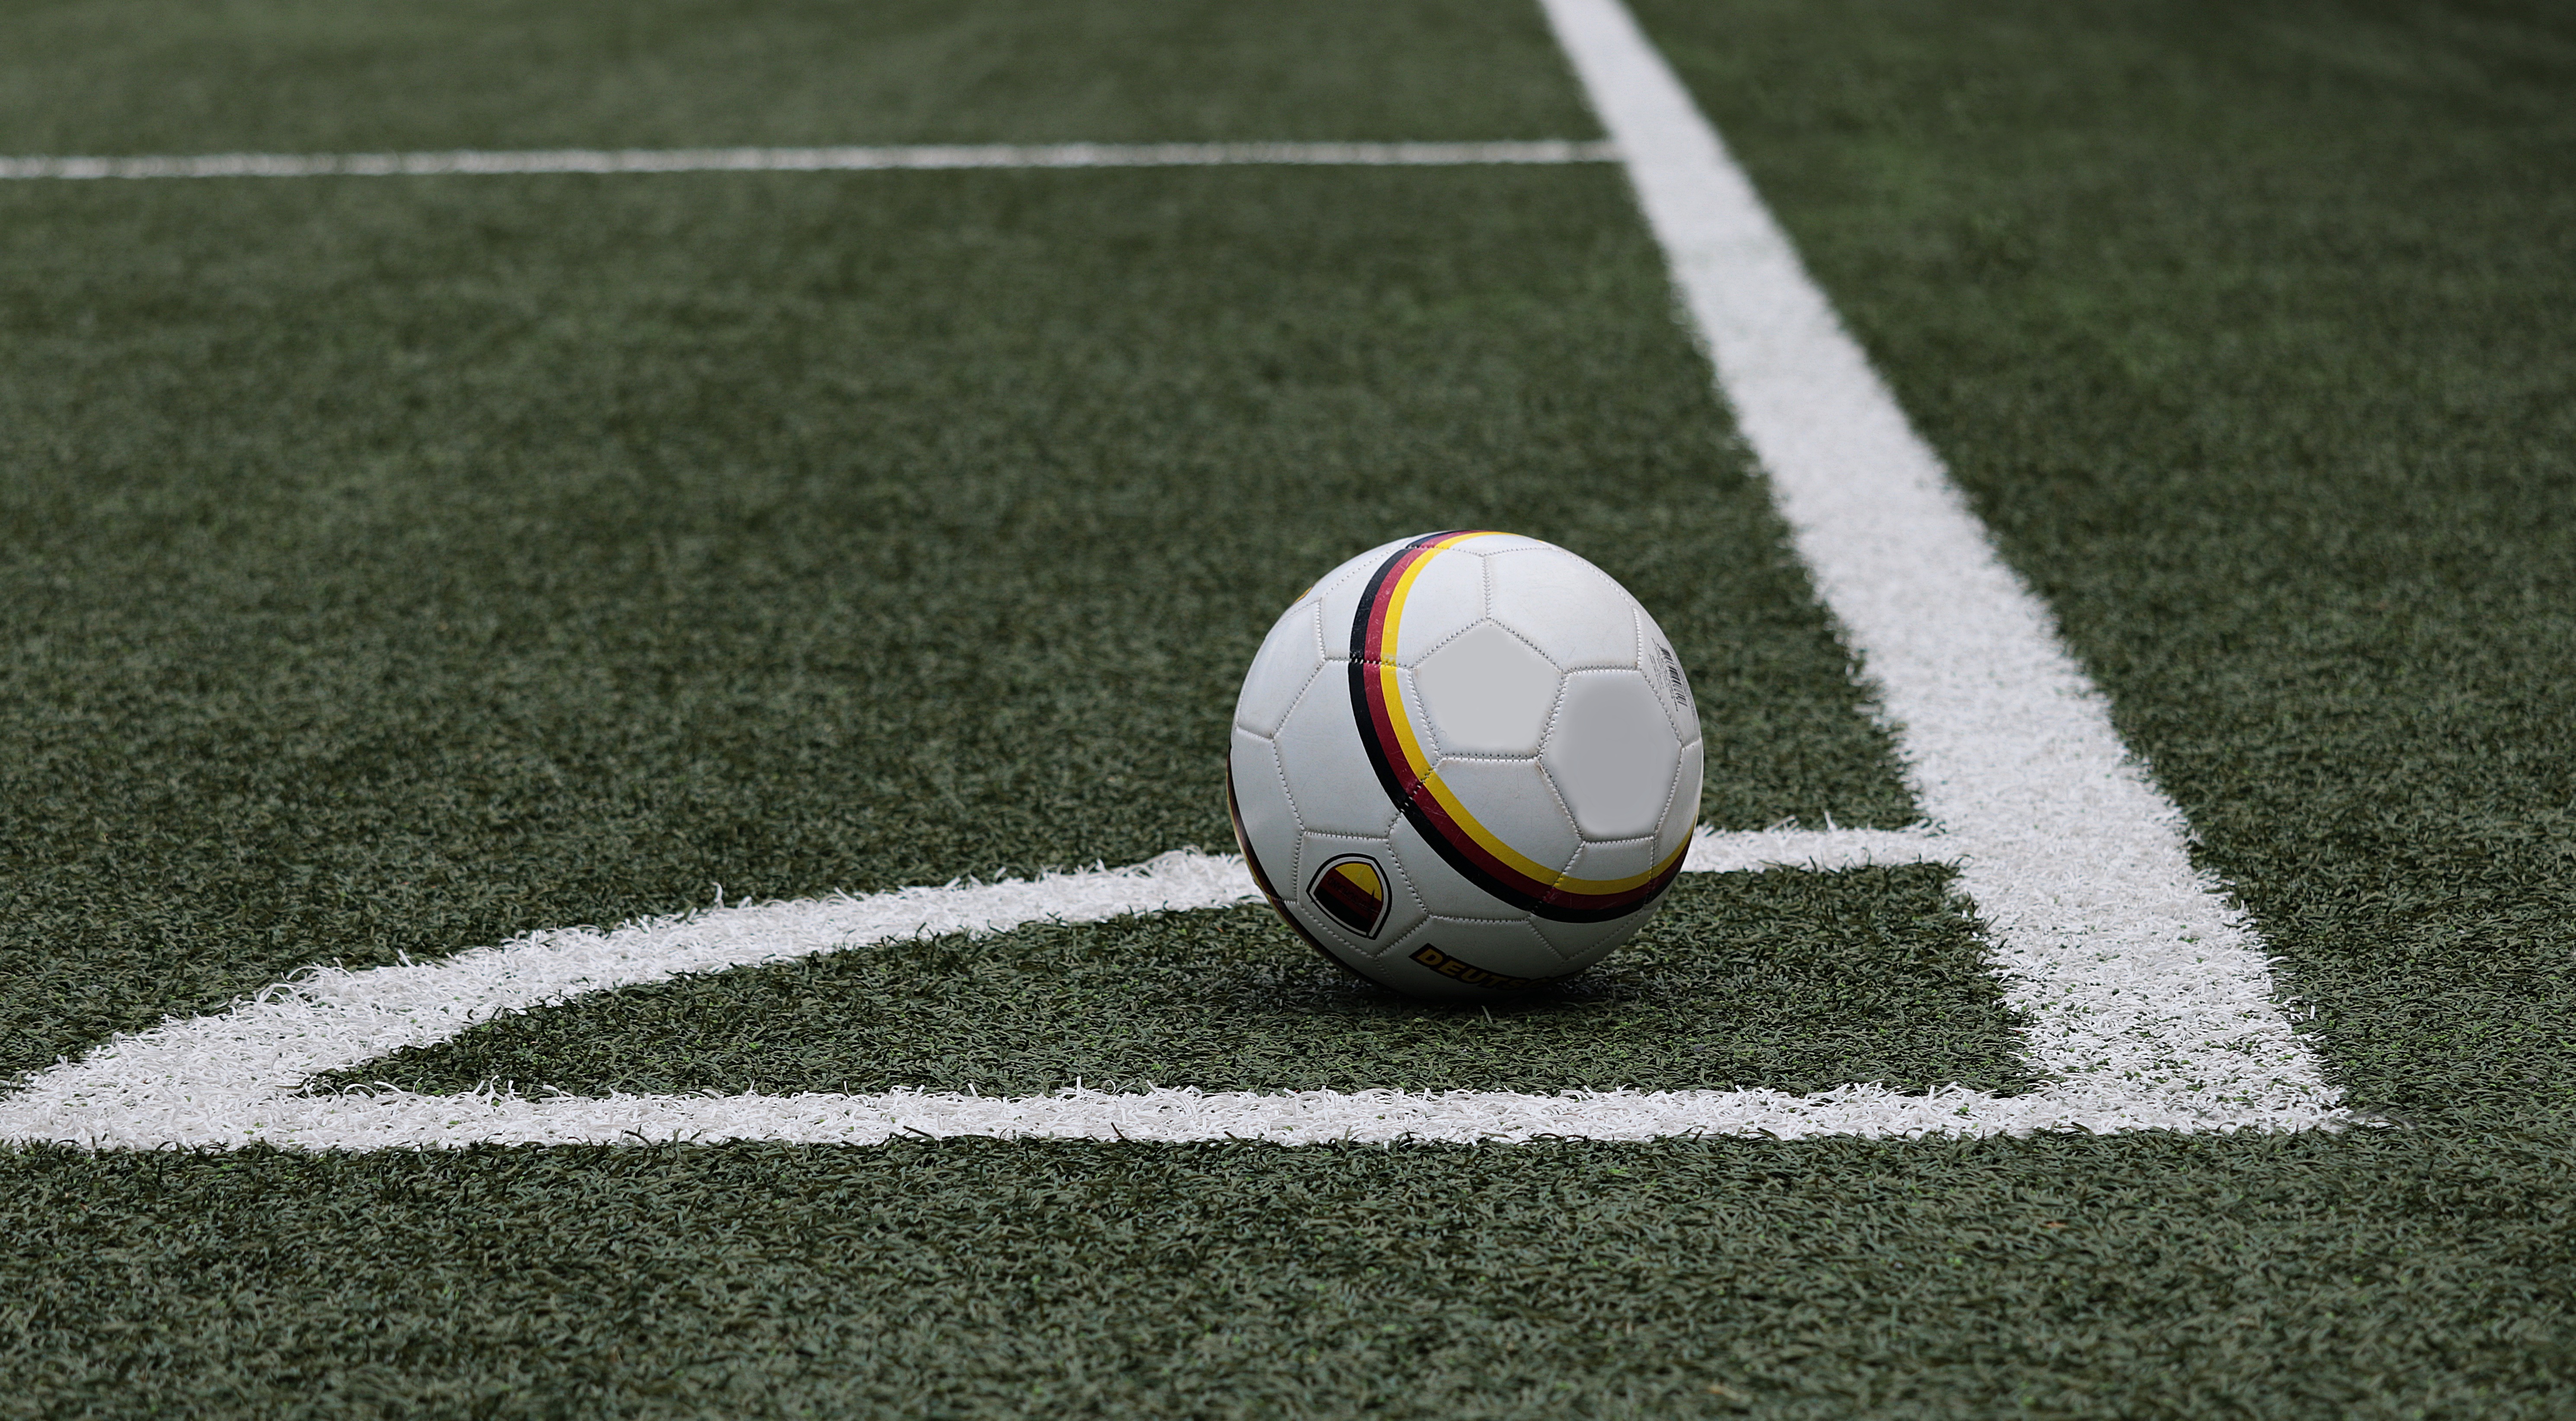 desktop Images soccer ball, football, sports, markup, lawn